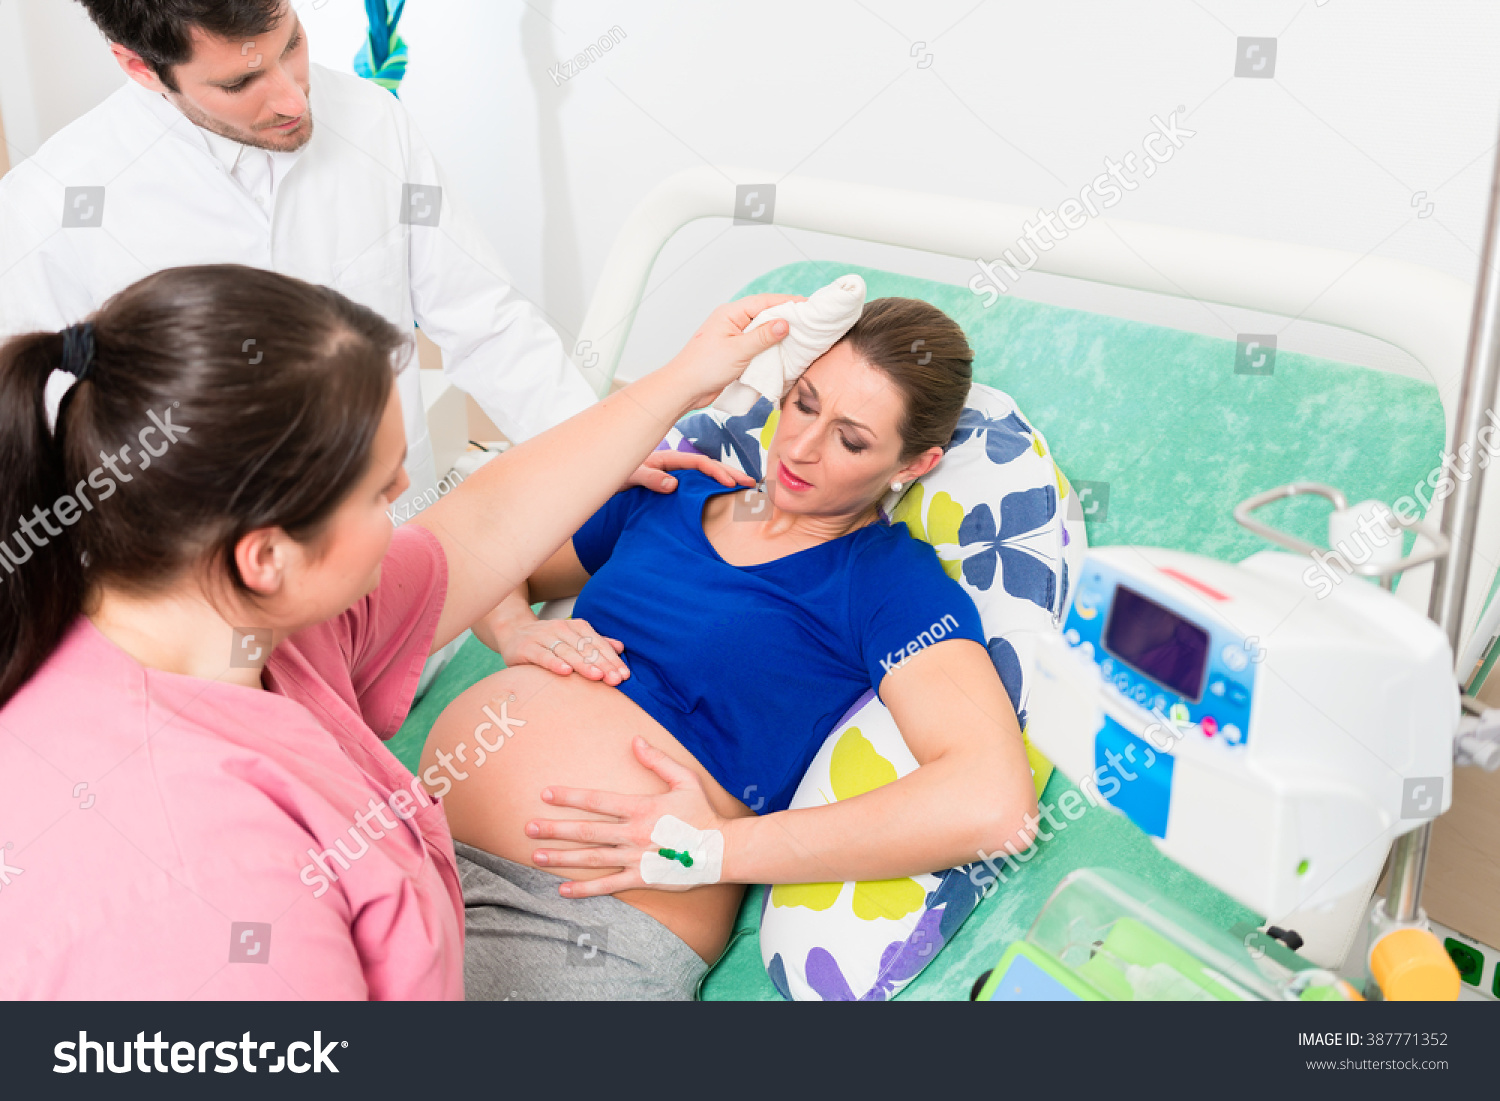 Doctor For Pregnant Women 91